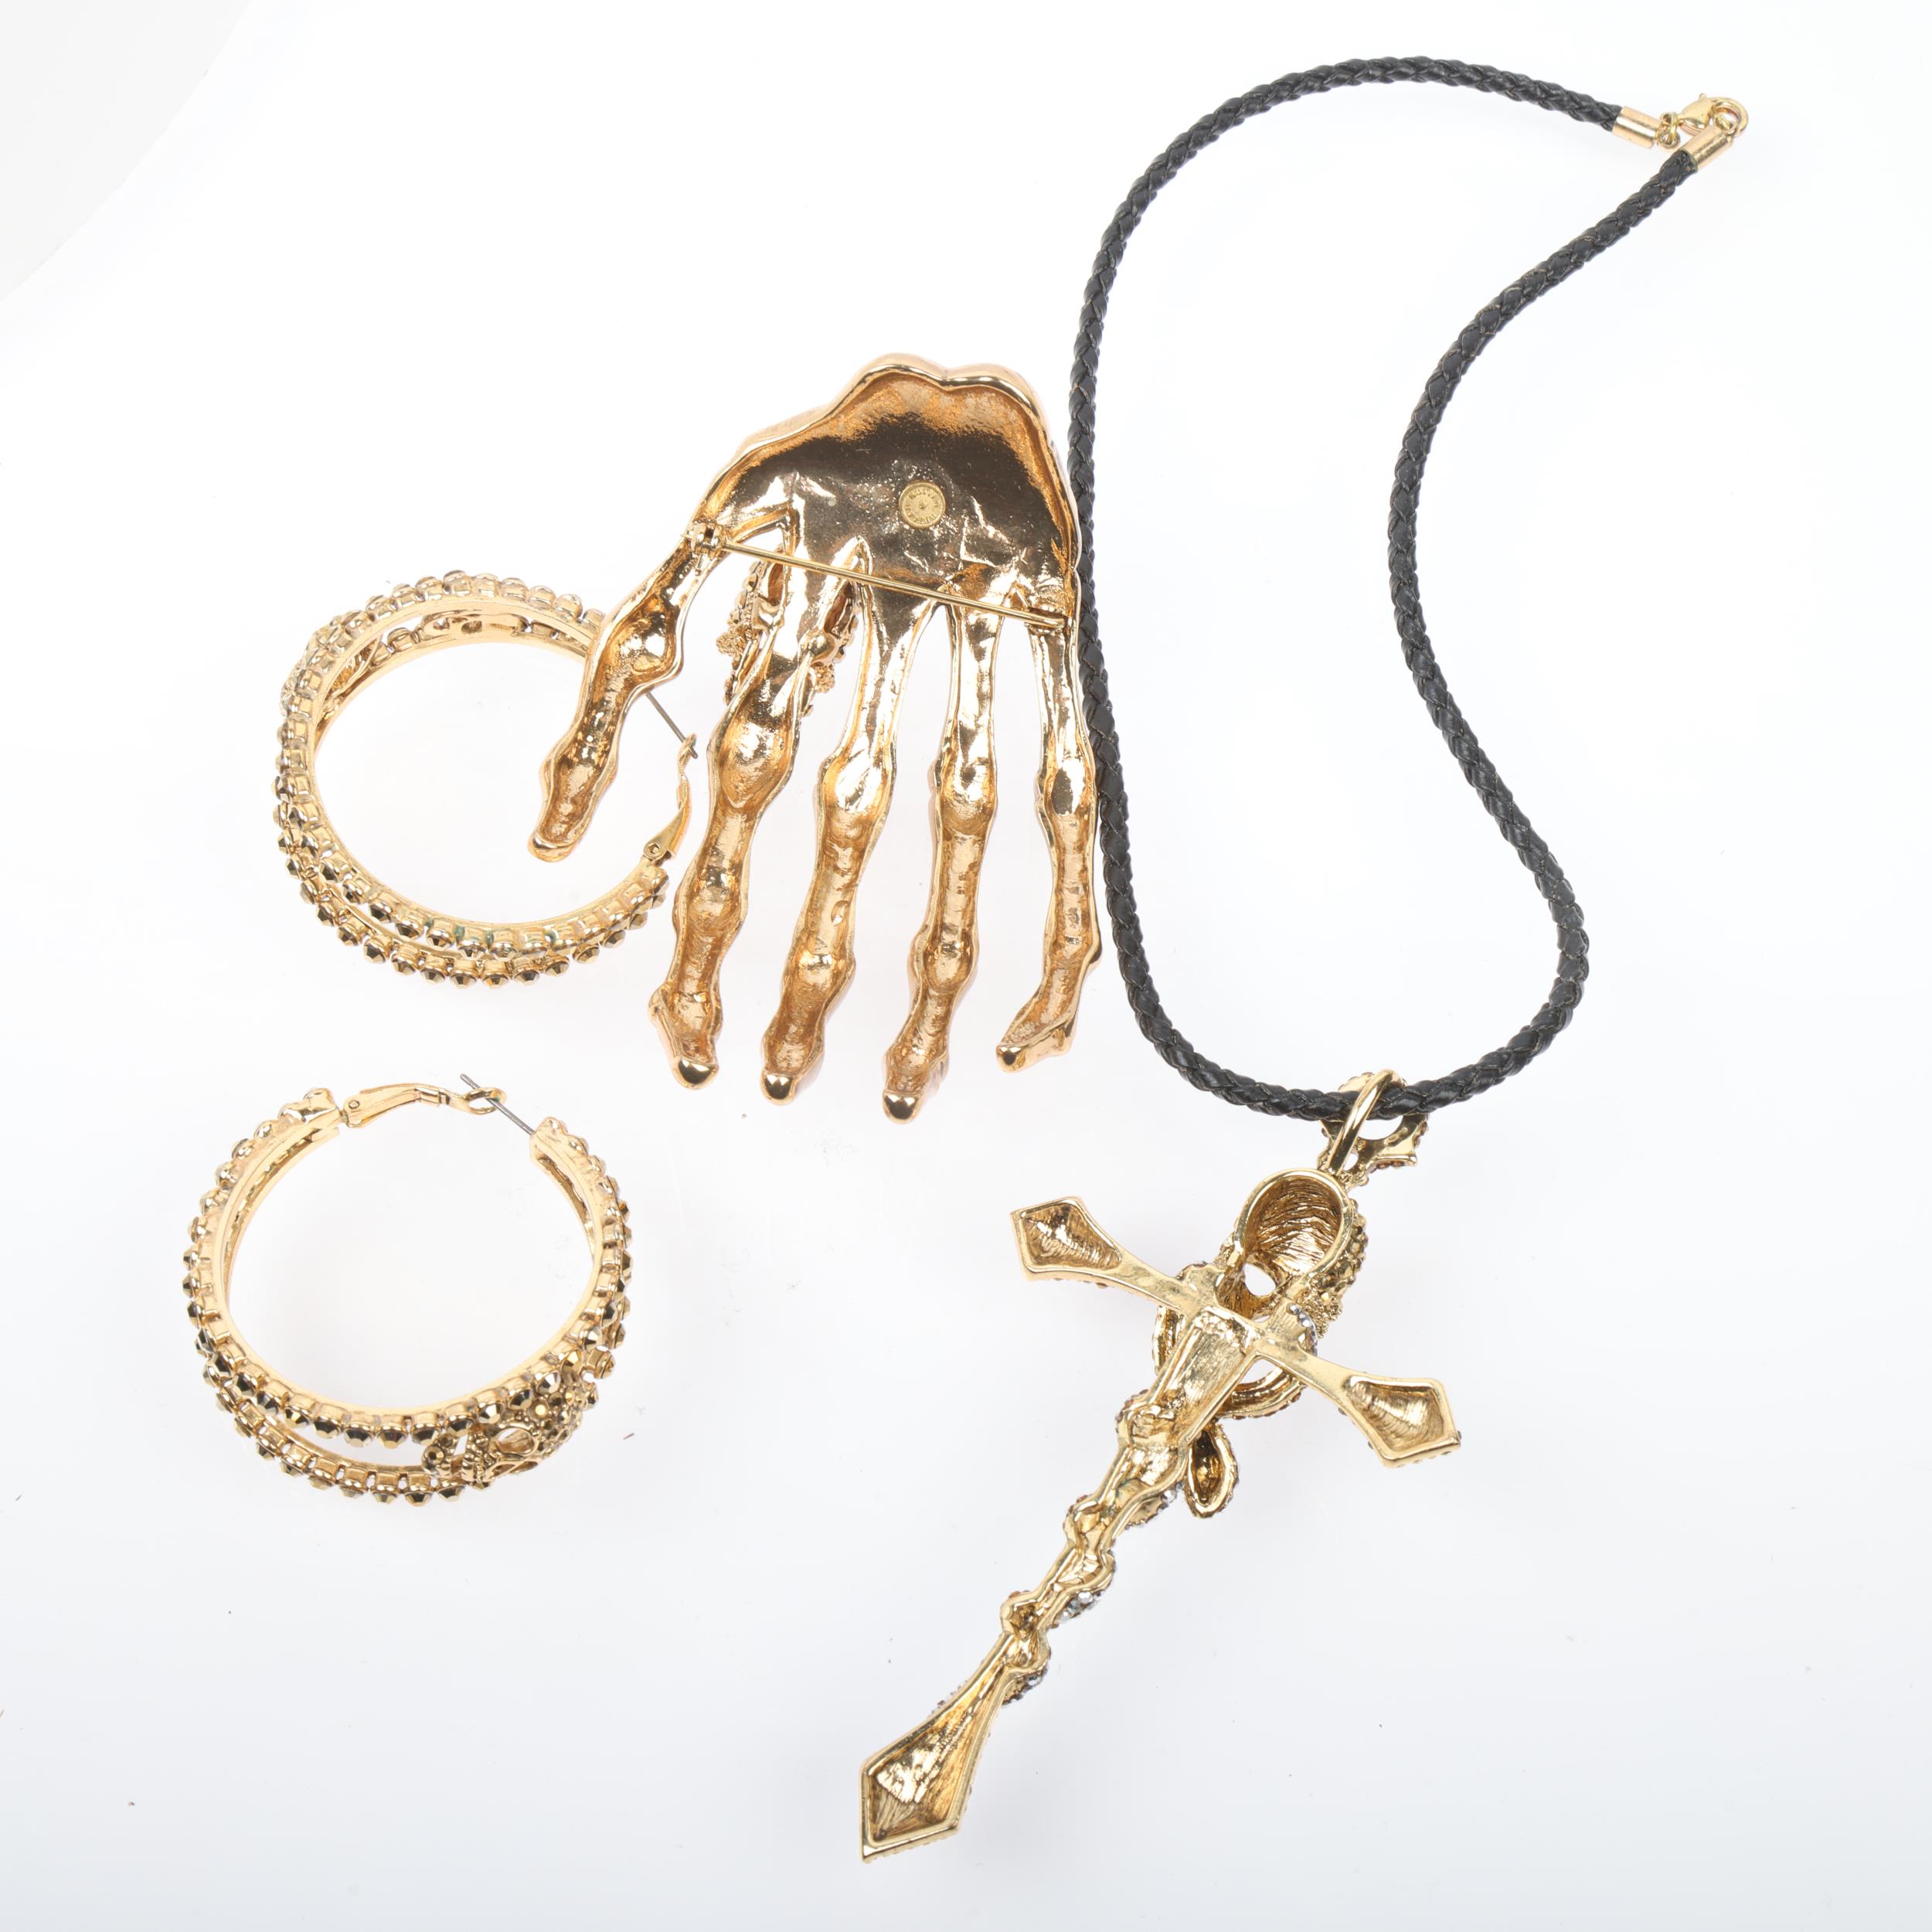 BUTLER & WILSON - a Vintage gilt-metal rhinestone skull jewellery set, comprising snake cross - Image 3 of 3